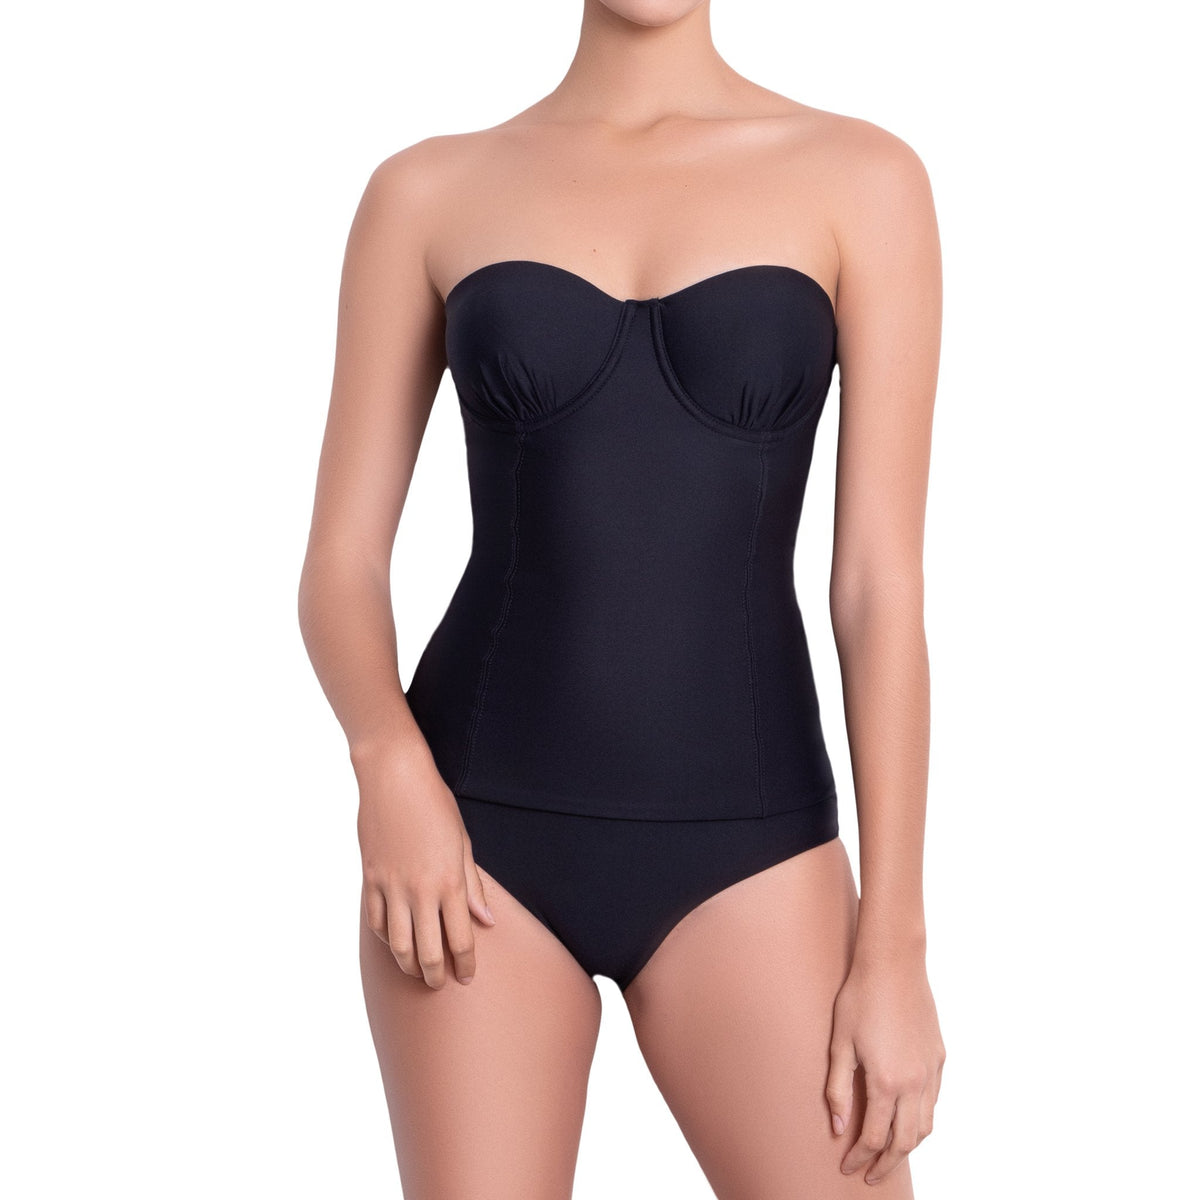 L√âA classic panty, solid black bikini bottom by ALMA swimwear ‚Äì front view 1